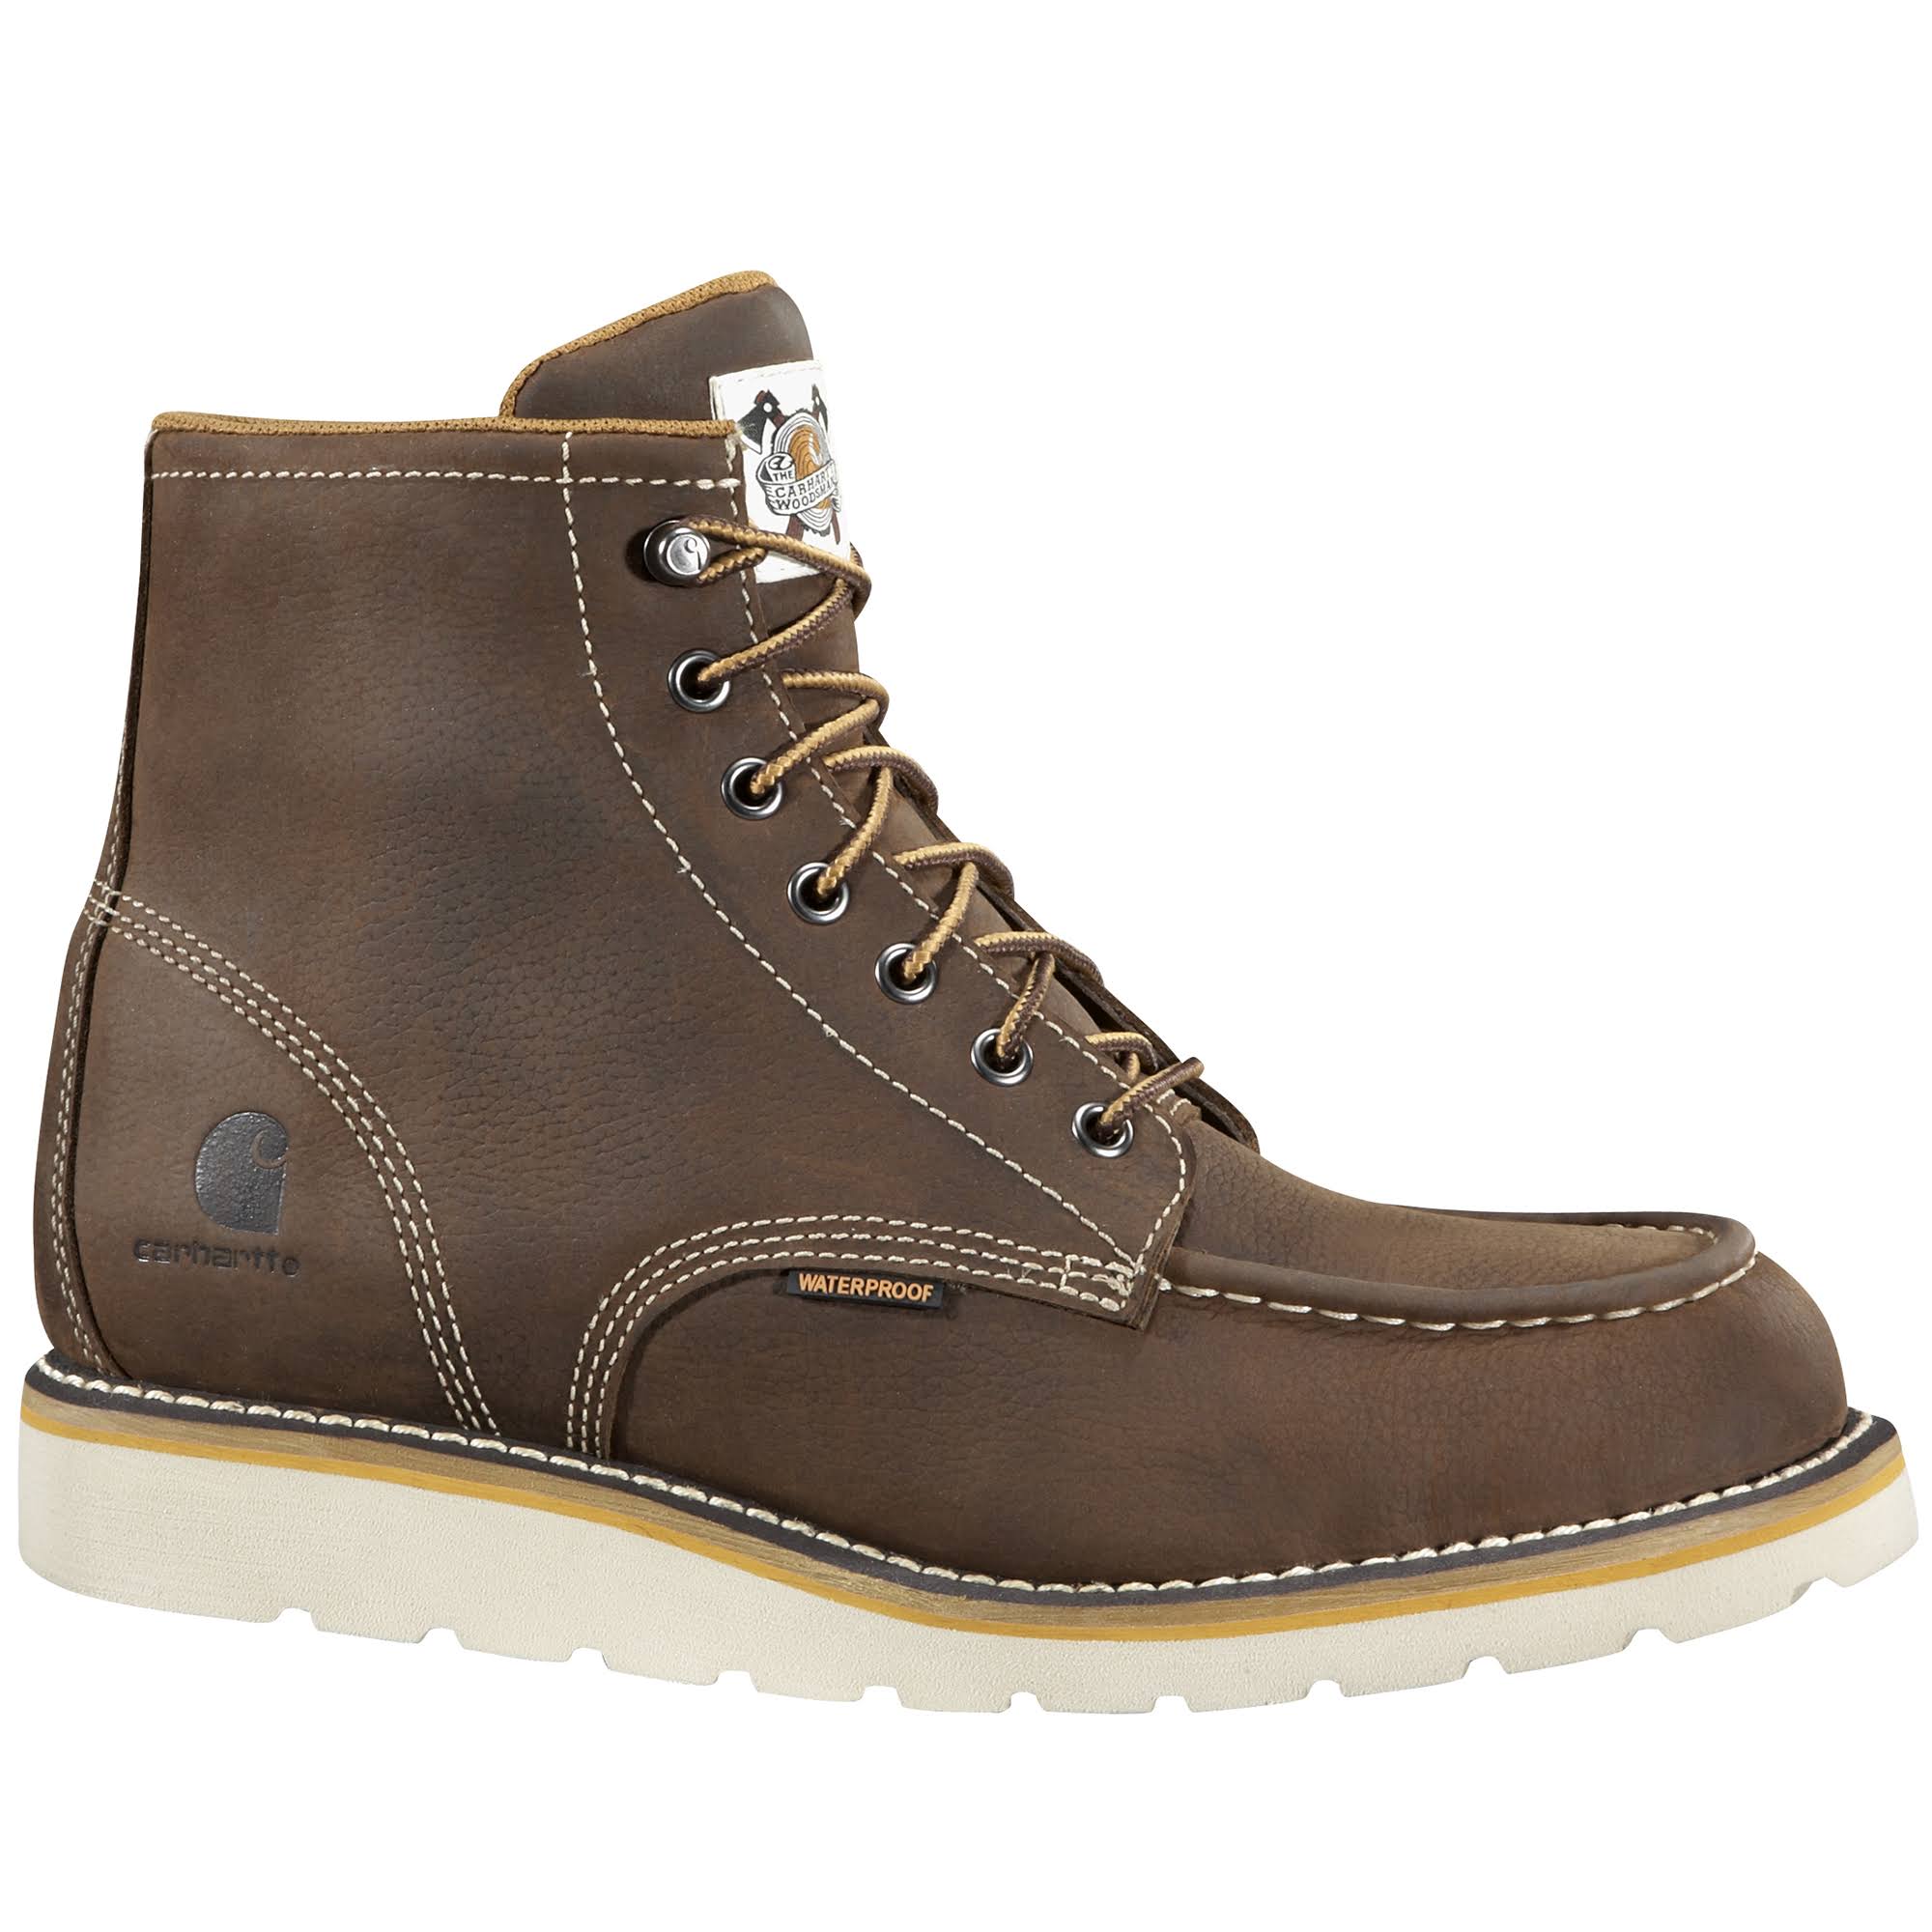 The Carhartt Men's Moc Toe Wedge Work Boots - Brown